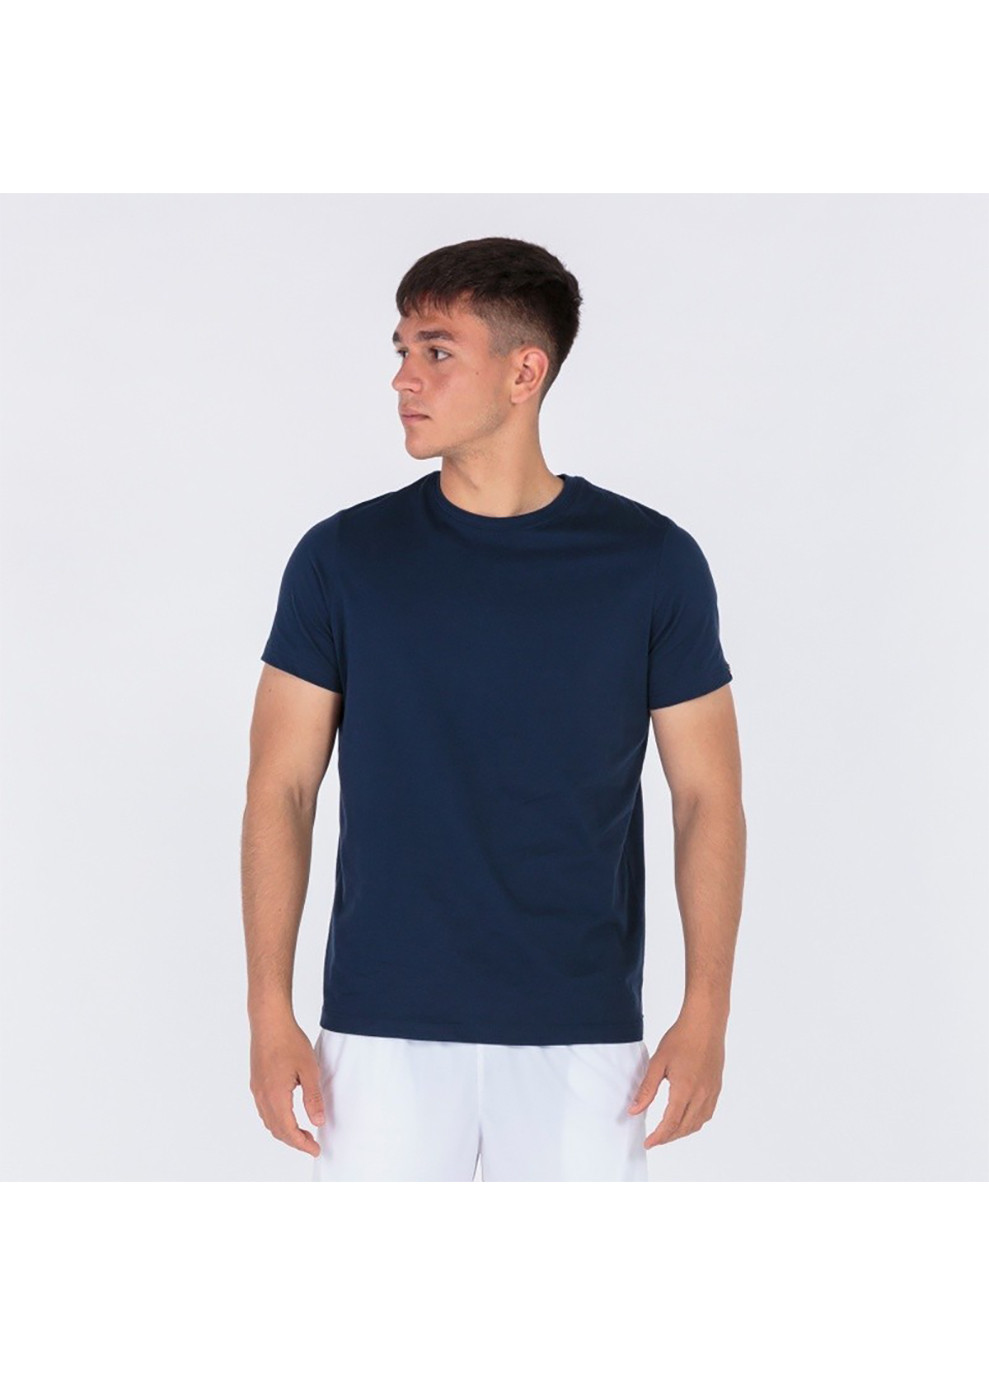 Синяя футболка desert short sleeve t-shirt синий Joma